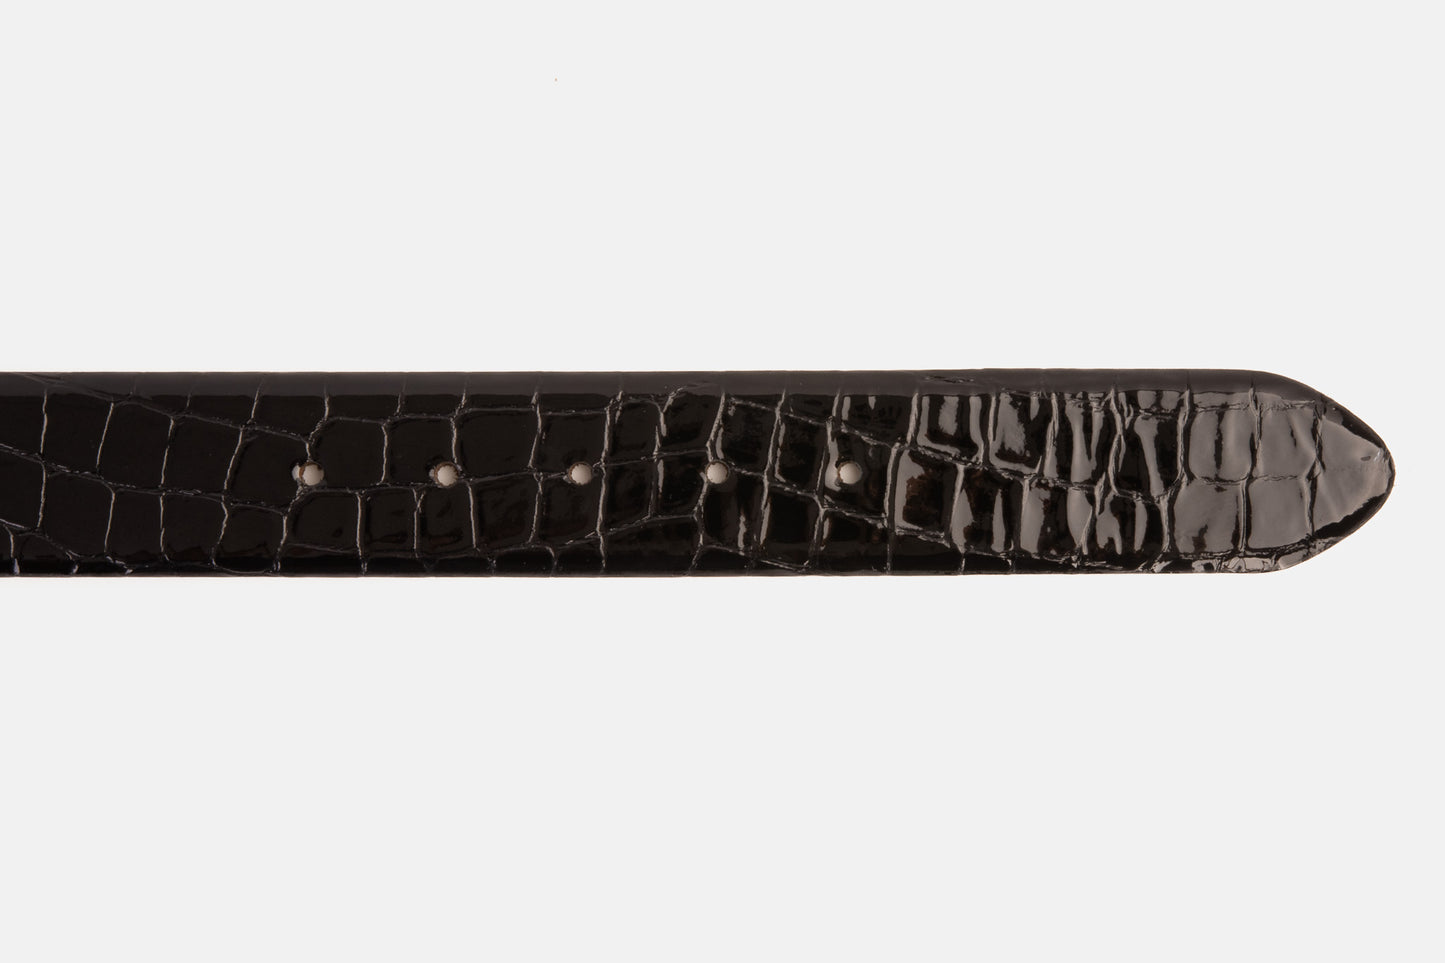 The Cordova Black Patent Leather Belt